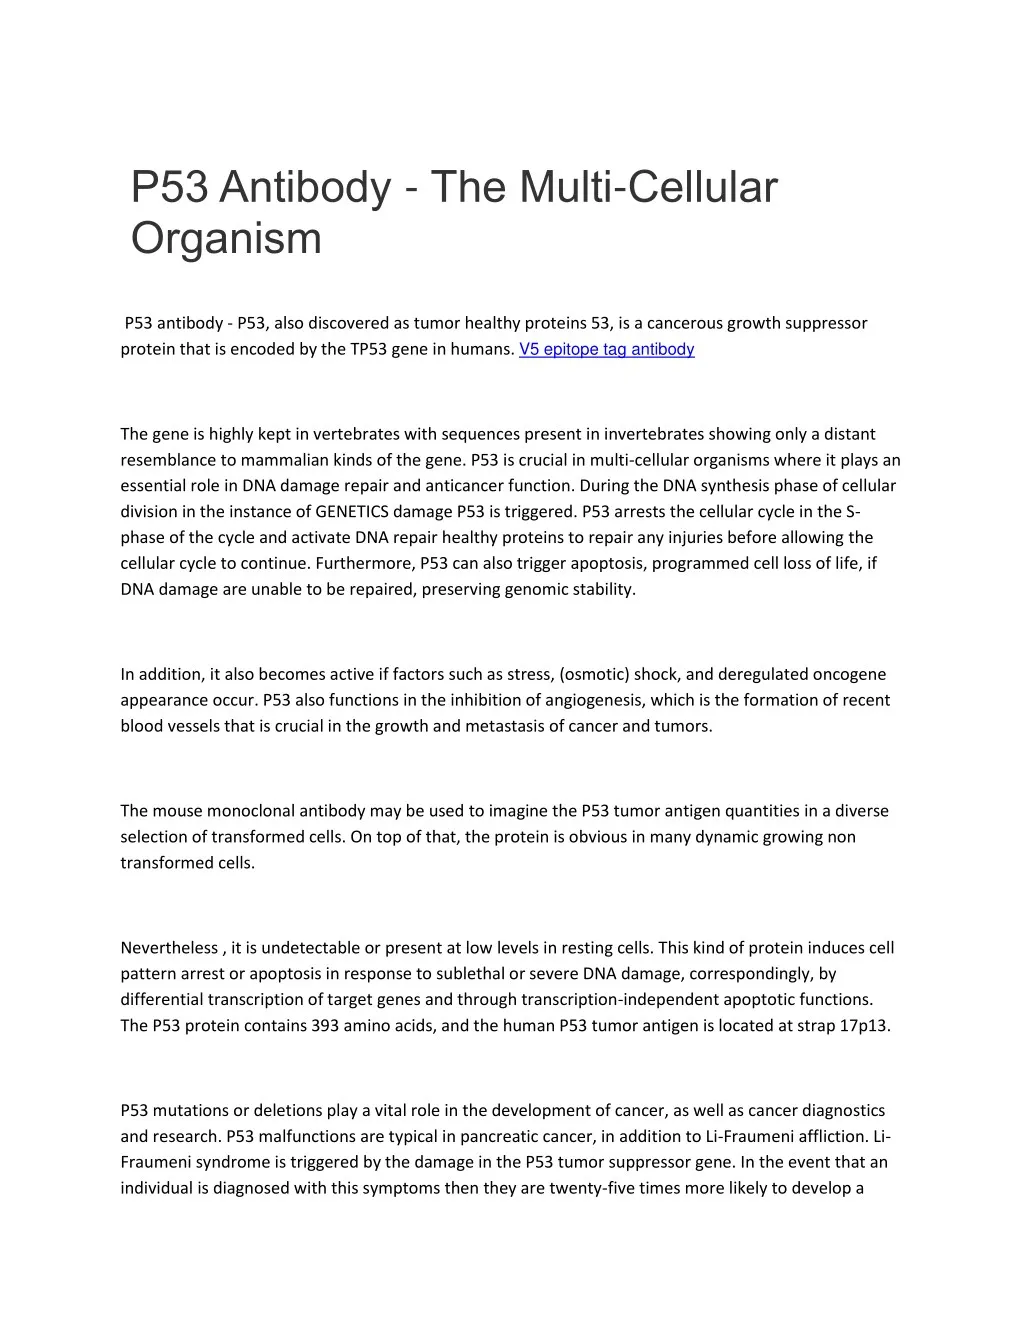 p53 antibody the multi cellular organism